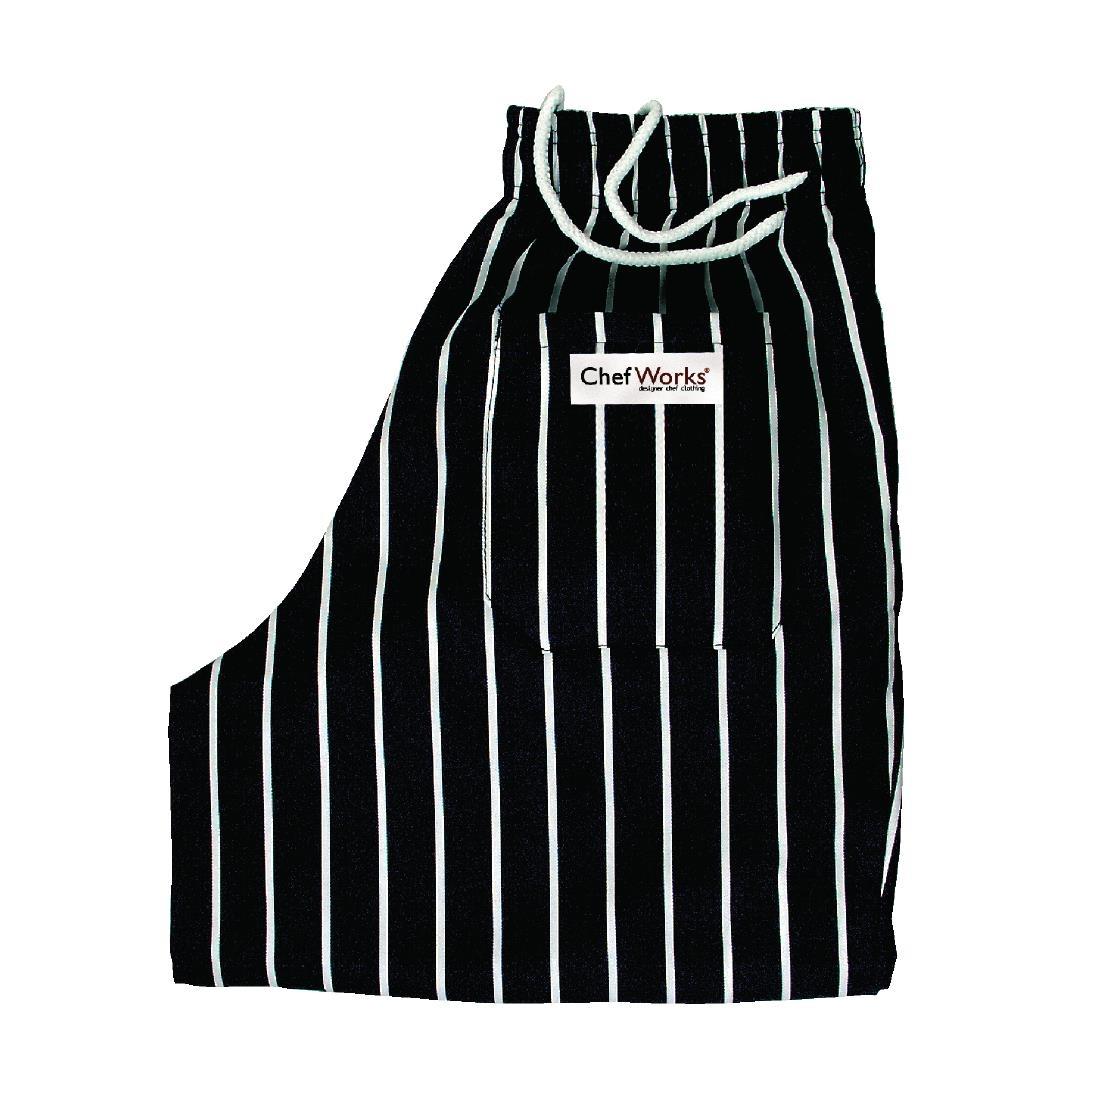 Chef Works Designer Baggy Pant Chalk Stripe M - A940-M  - 3